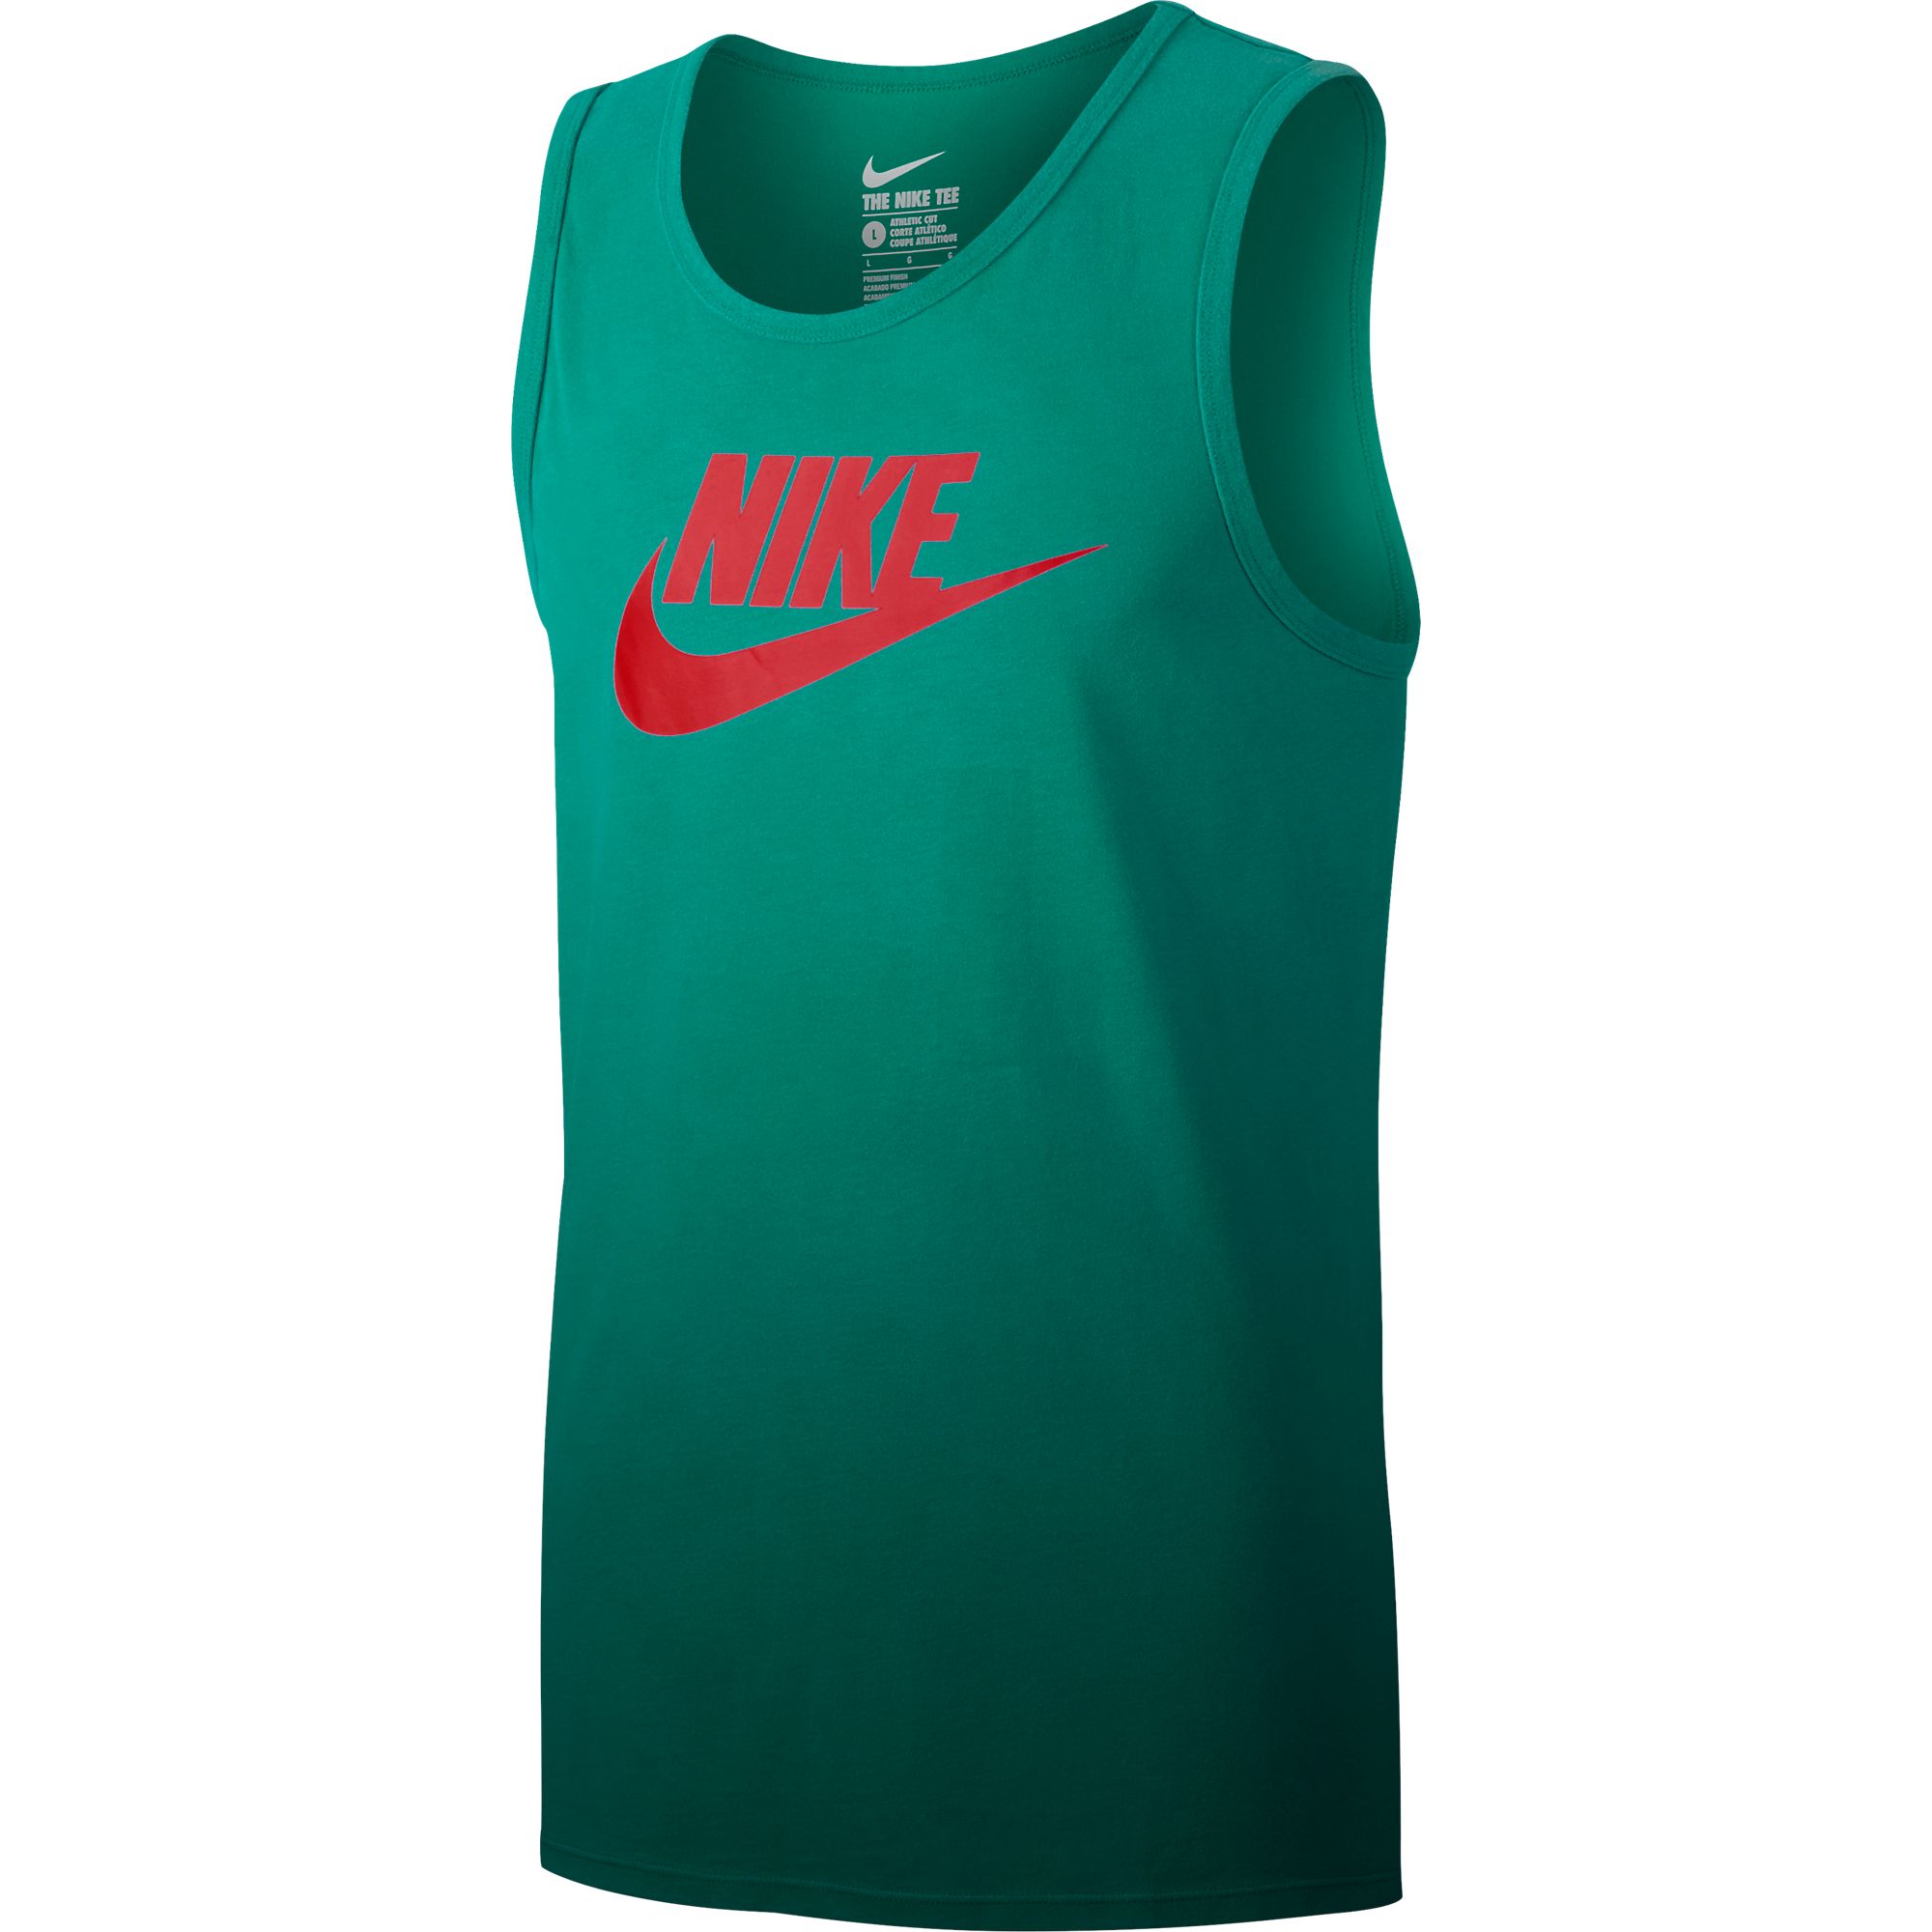 Nike Solstice Futura Men's Tank Top Medium Green729833-351 | eBay